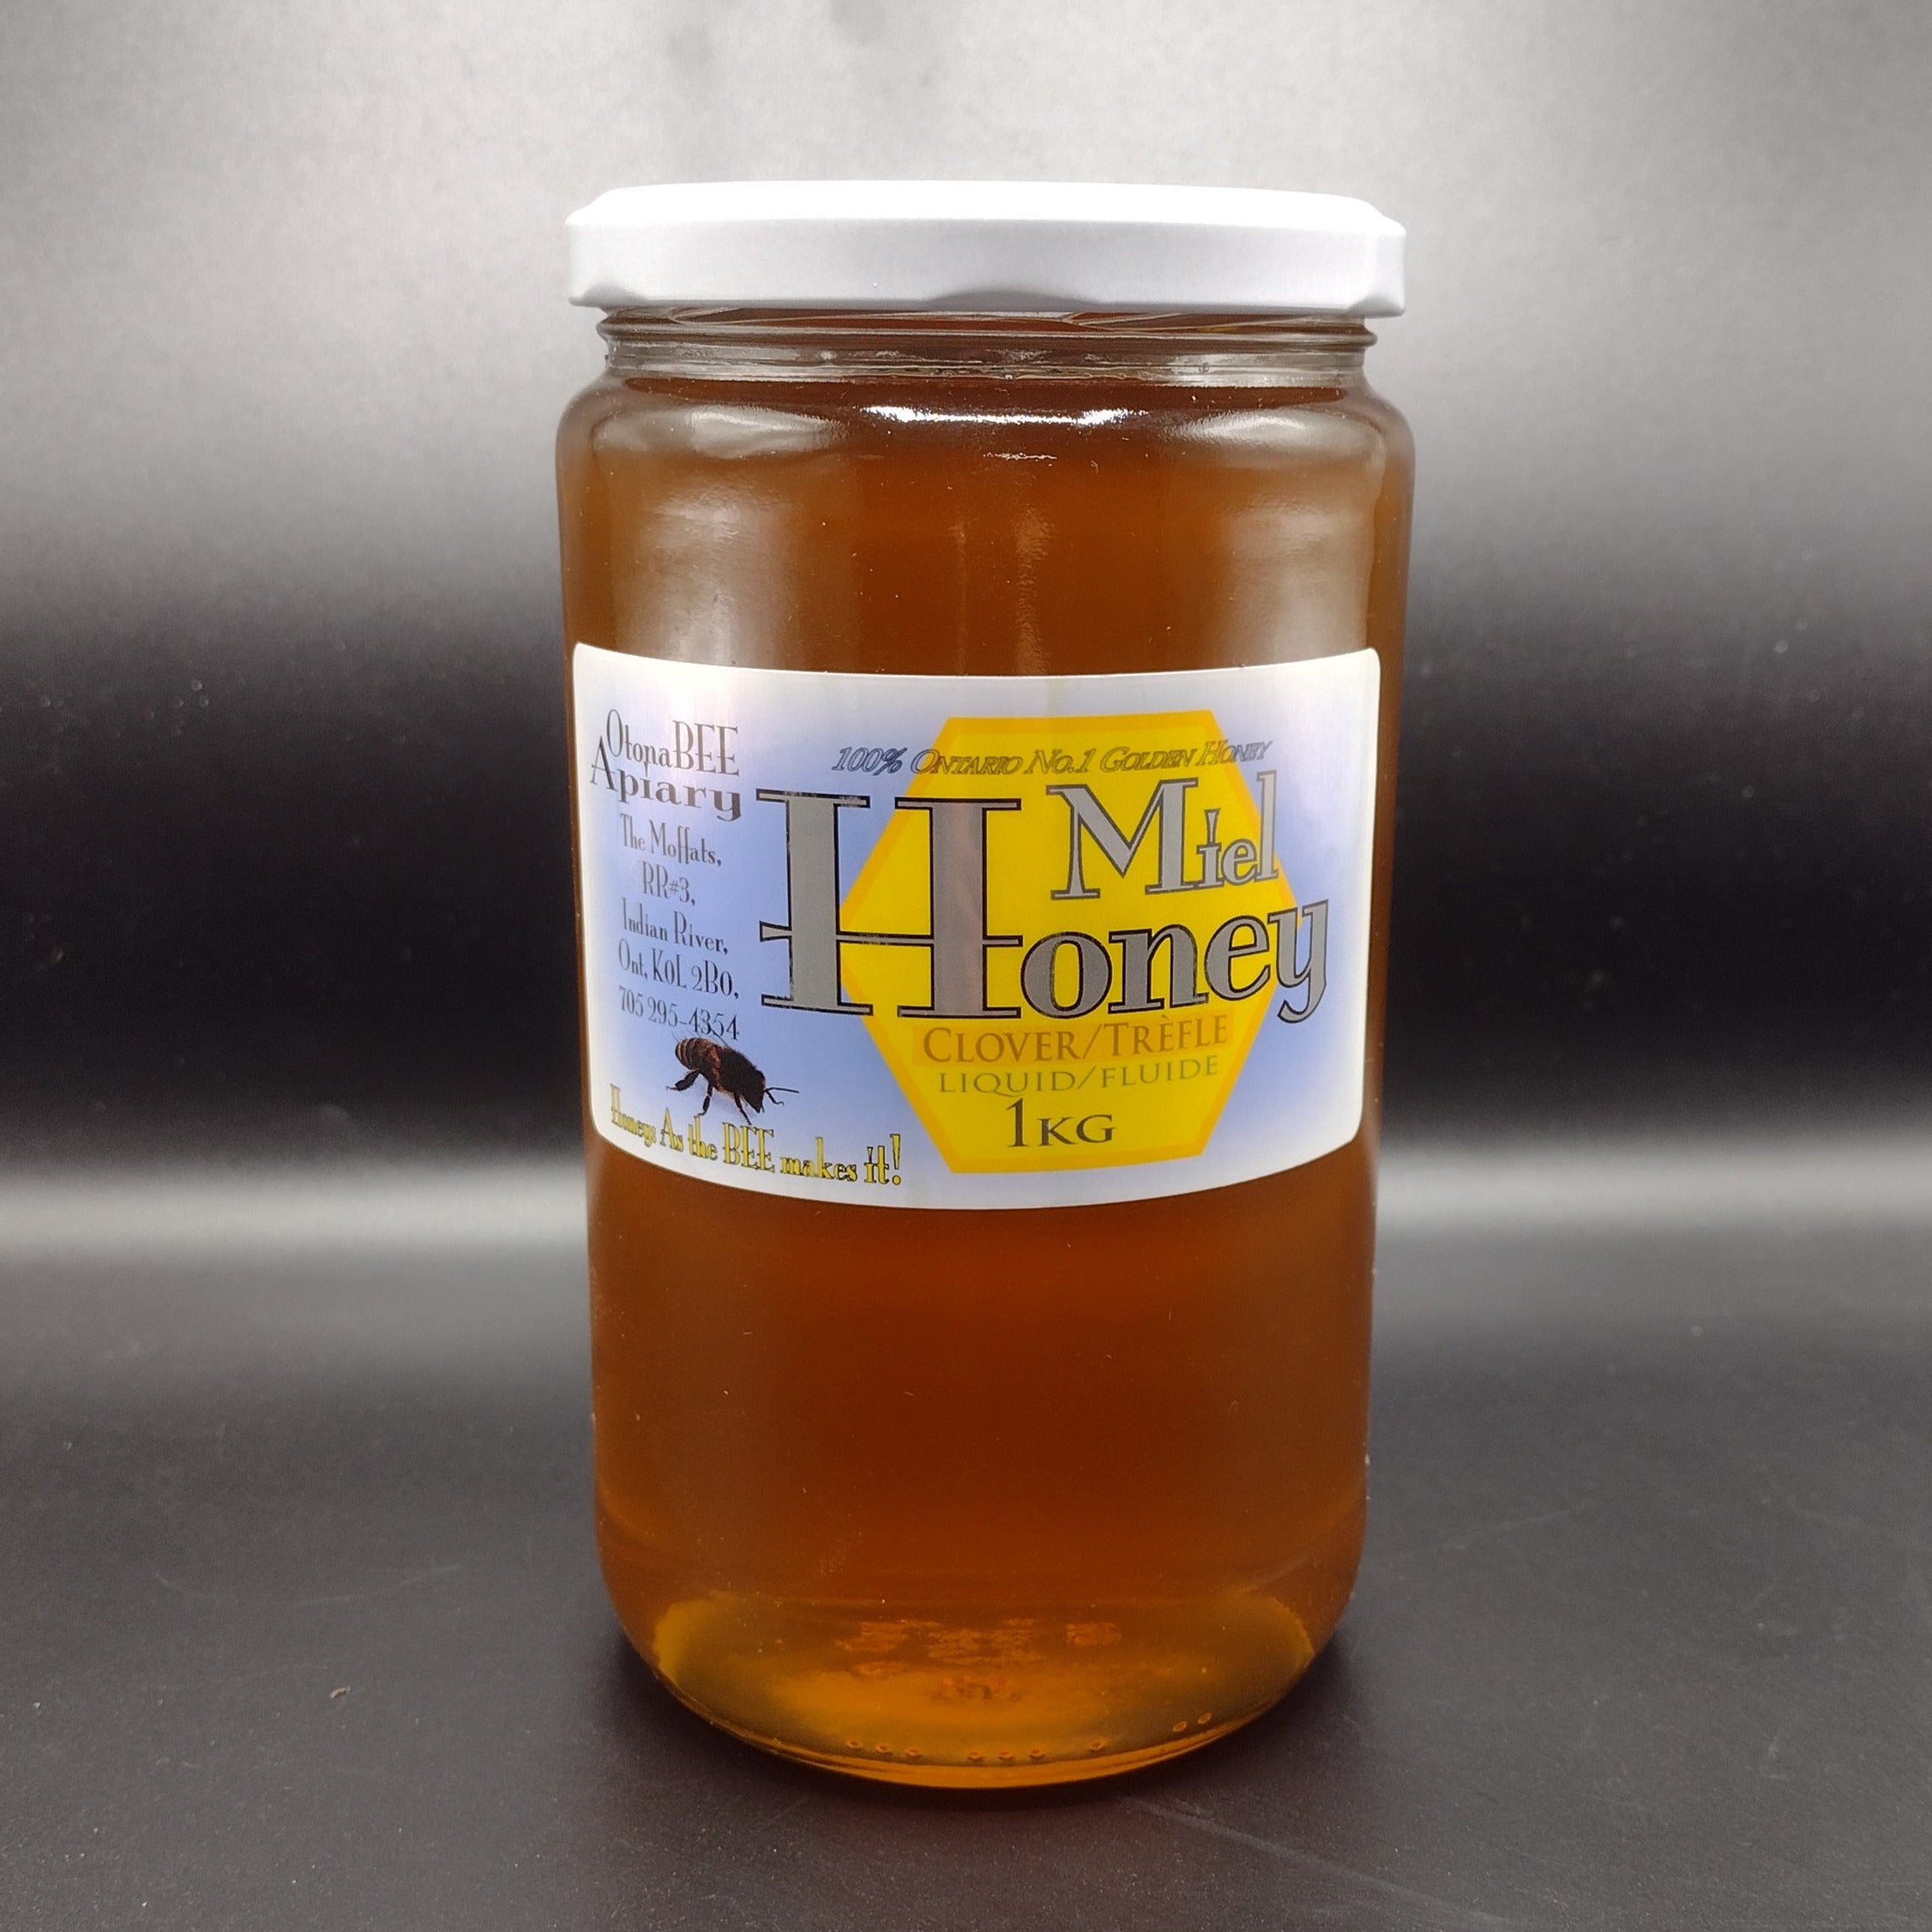 1kg jar of honey